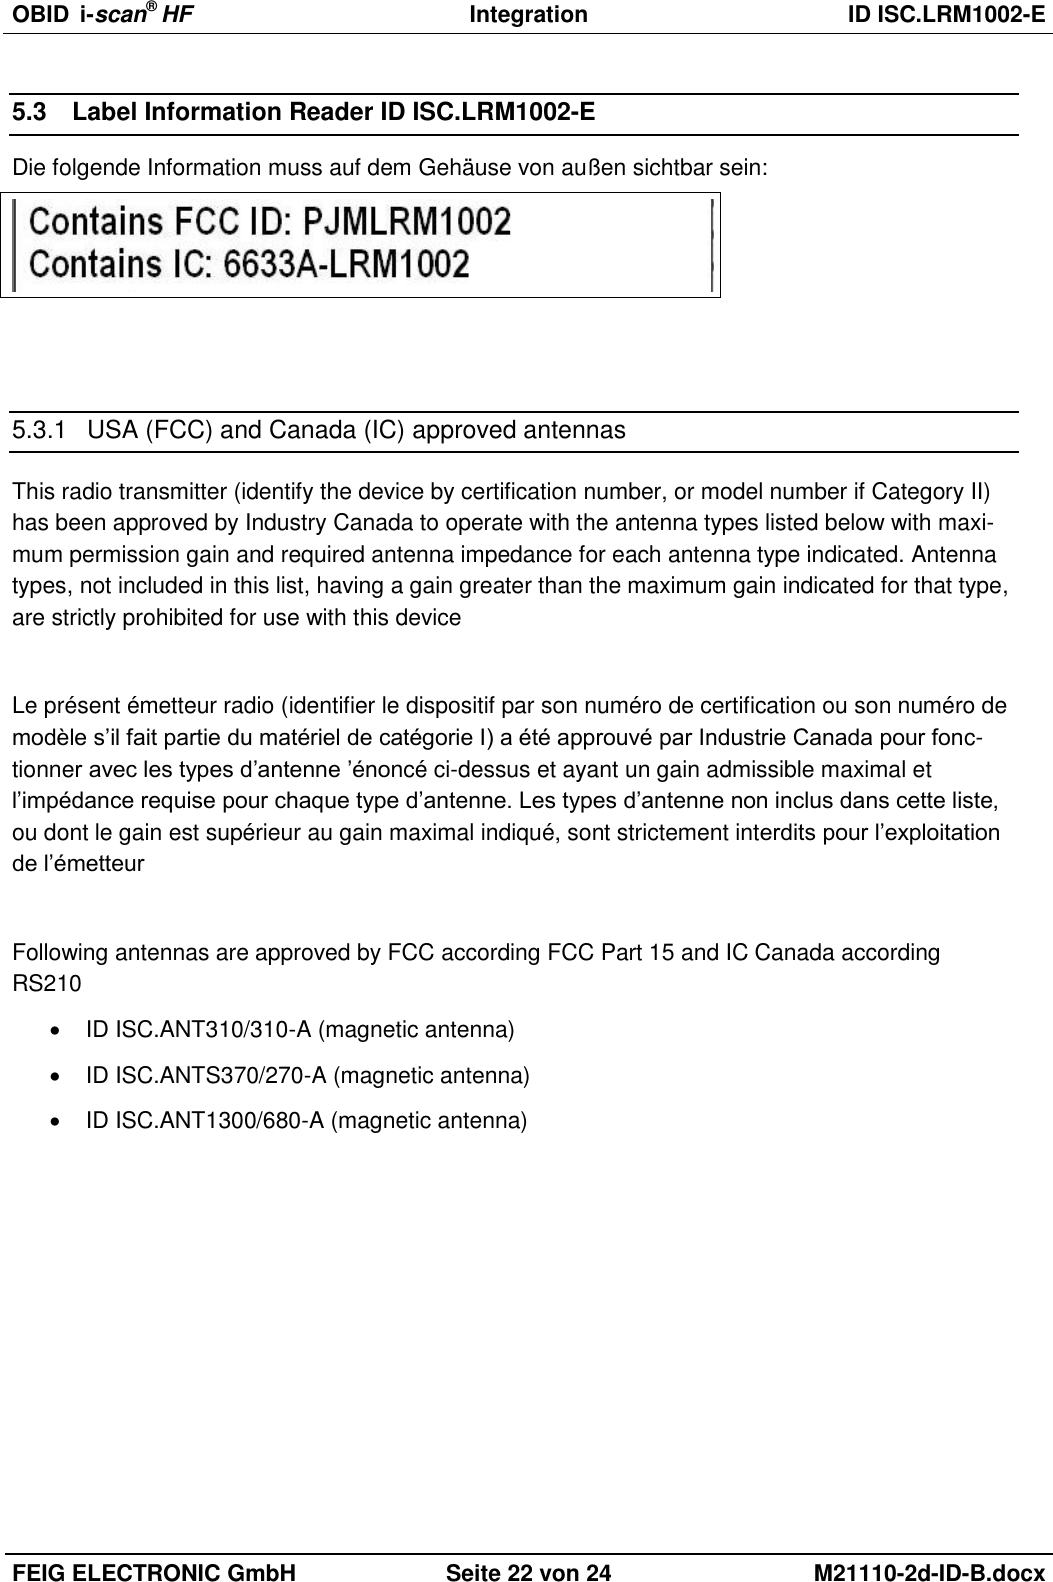 OBID  i-scan® HF Integration  ID ISC.LRM1002-E  FEIG ELECTRONIC GmbH Seite 22 von 24 M21110-2d-ID-B.docx  5.3  Label Information Reader ID ISC.LRM1002-E Die folgende Information muss auf dem Gehäuse von außen sichtbar sein:    5.3.1  USA (FCC) and Canada (IC) approved antennas This radio transmitter (identify the device by certification number, or model number if Category II) has been approved by Industry Canada to operate with the antenna types listed below with maxi-mum permission gain and required antenna impedance for each antenna type indicated. Antenna types, not included in this list, having a gain greater than the maximum gain indicated for that type, are strictly prohibited for use with this device  Le présent émetteur radio (identifier le dispositif par son numéro de certification ou son numéro de modèle s’il fait partie du matériel de catégorie I) a été approuvé par Industrie Canada pour fonc-tionner avec les types d’antenne ’énoncé ci-dessus et ayant un gain admissible maximal et l’impédance requise pour chaque type d’antenne. Les types d’antenne non inclus dans cette liste, ou dont le gain est supérieur au gain maximal indiqué, sont strictement interdits pour l’exploitation de l’émetteur  Following antennas are approved by FCC according FCC Part 15 and IC Canada according RS210   ID ISC.ANT310/310-A (magnetic antenna)   ID ISC.ANTS370/270-A (magnetic antenna)   ID ISC.ANT1300/680-A (magnetic antenna)  